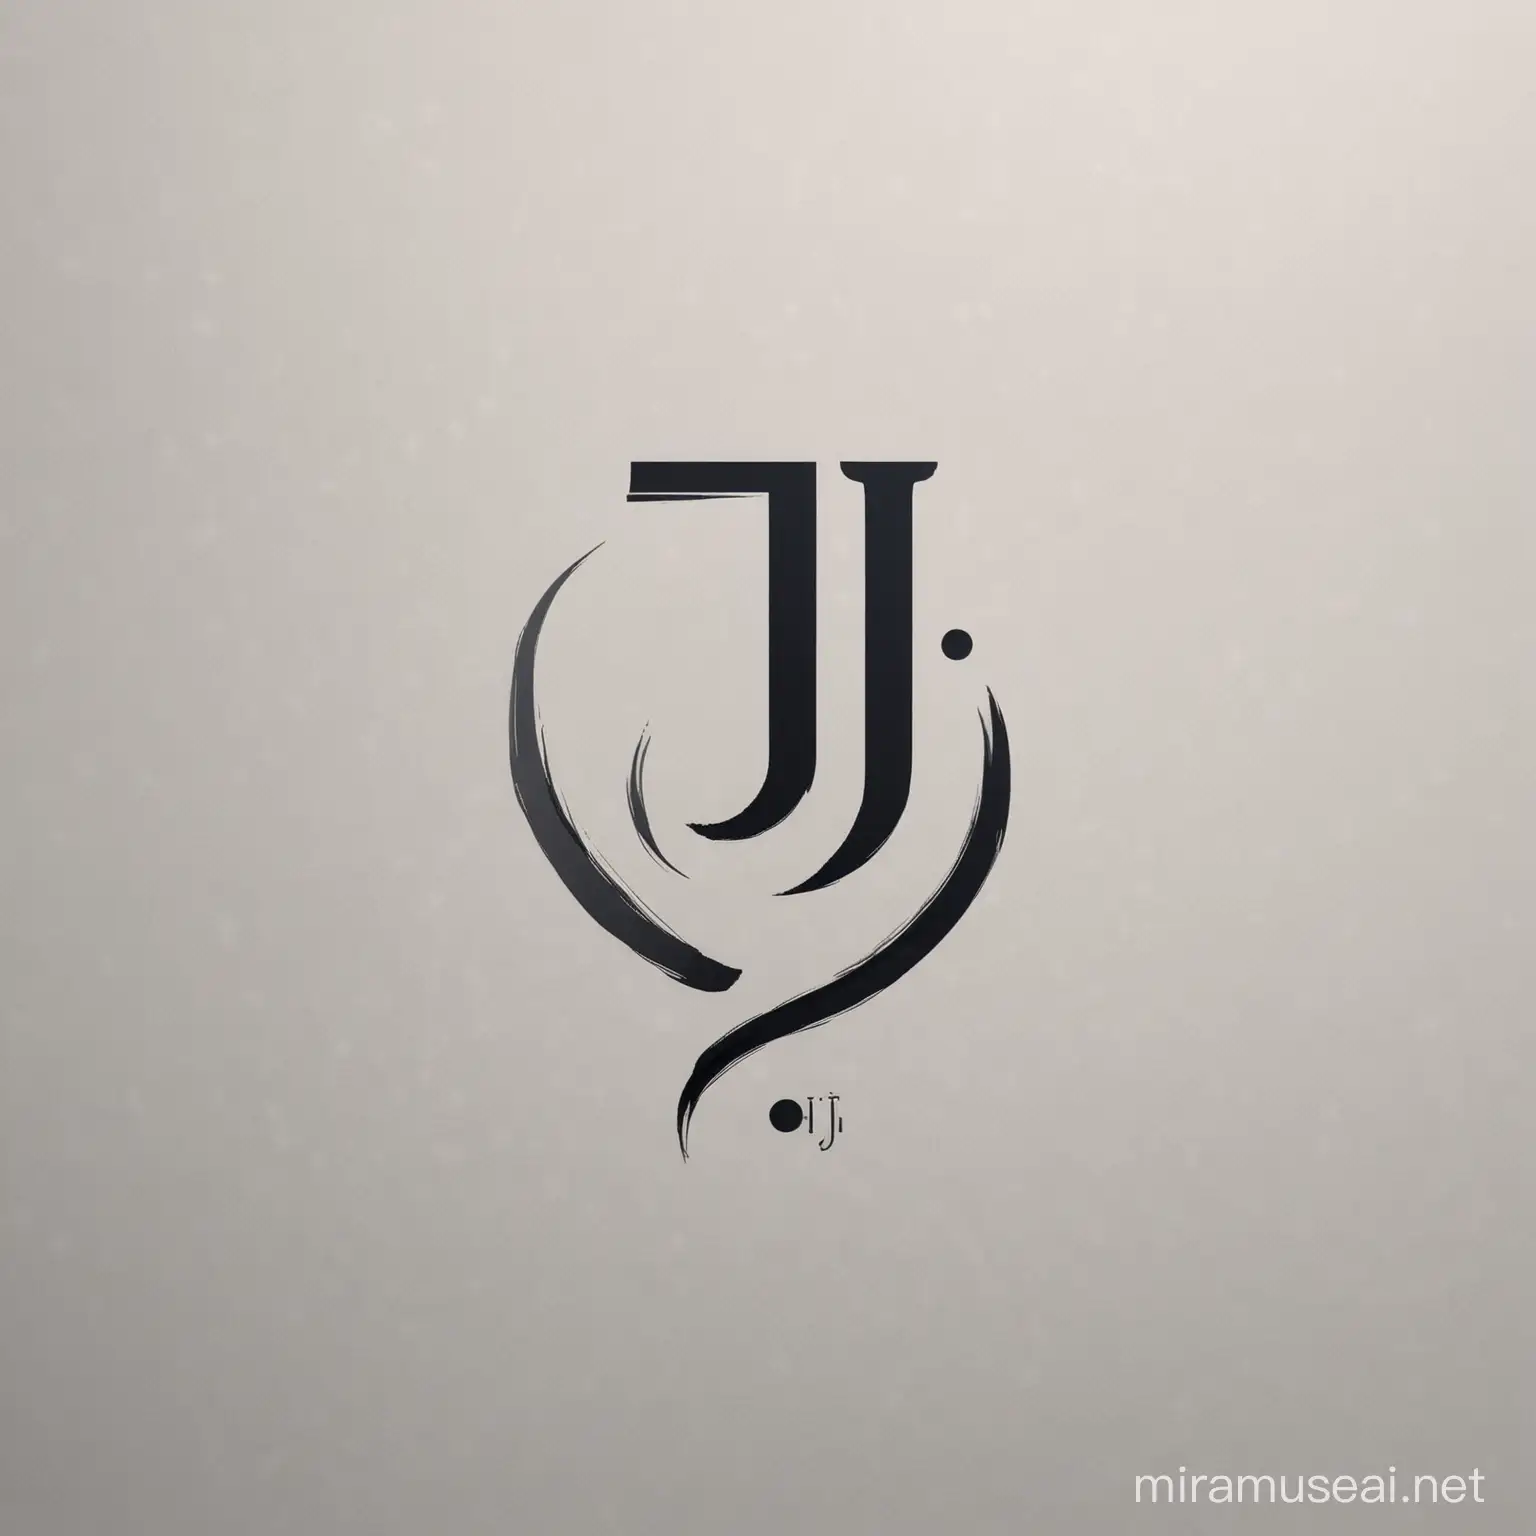 Minimalistic Vector Logo Design with Initials JJ